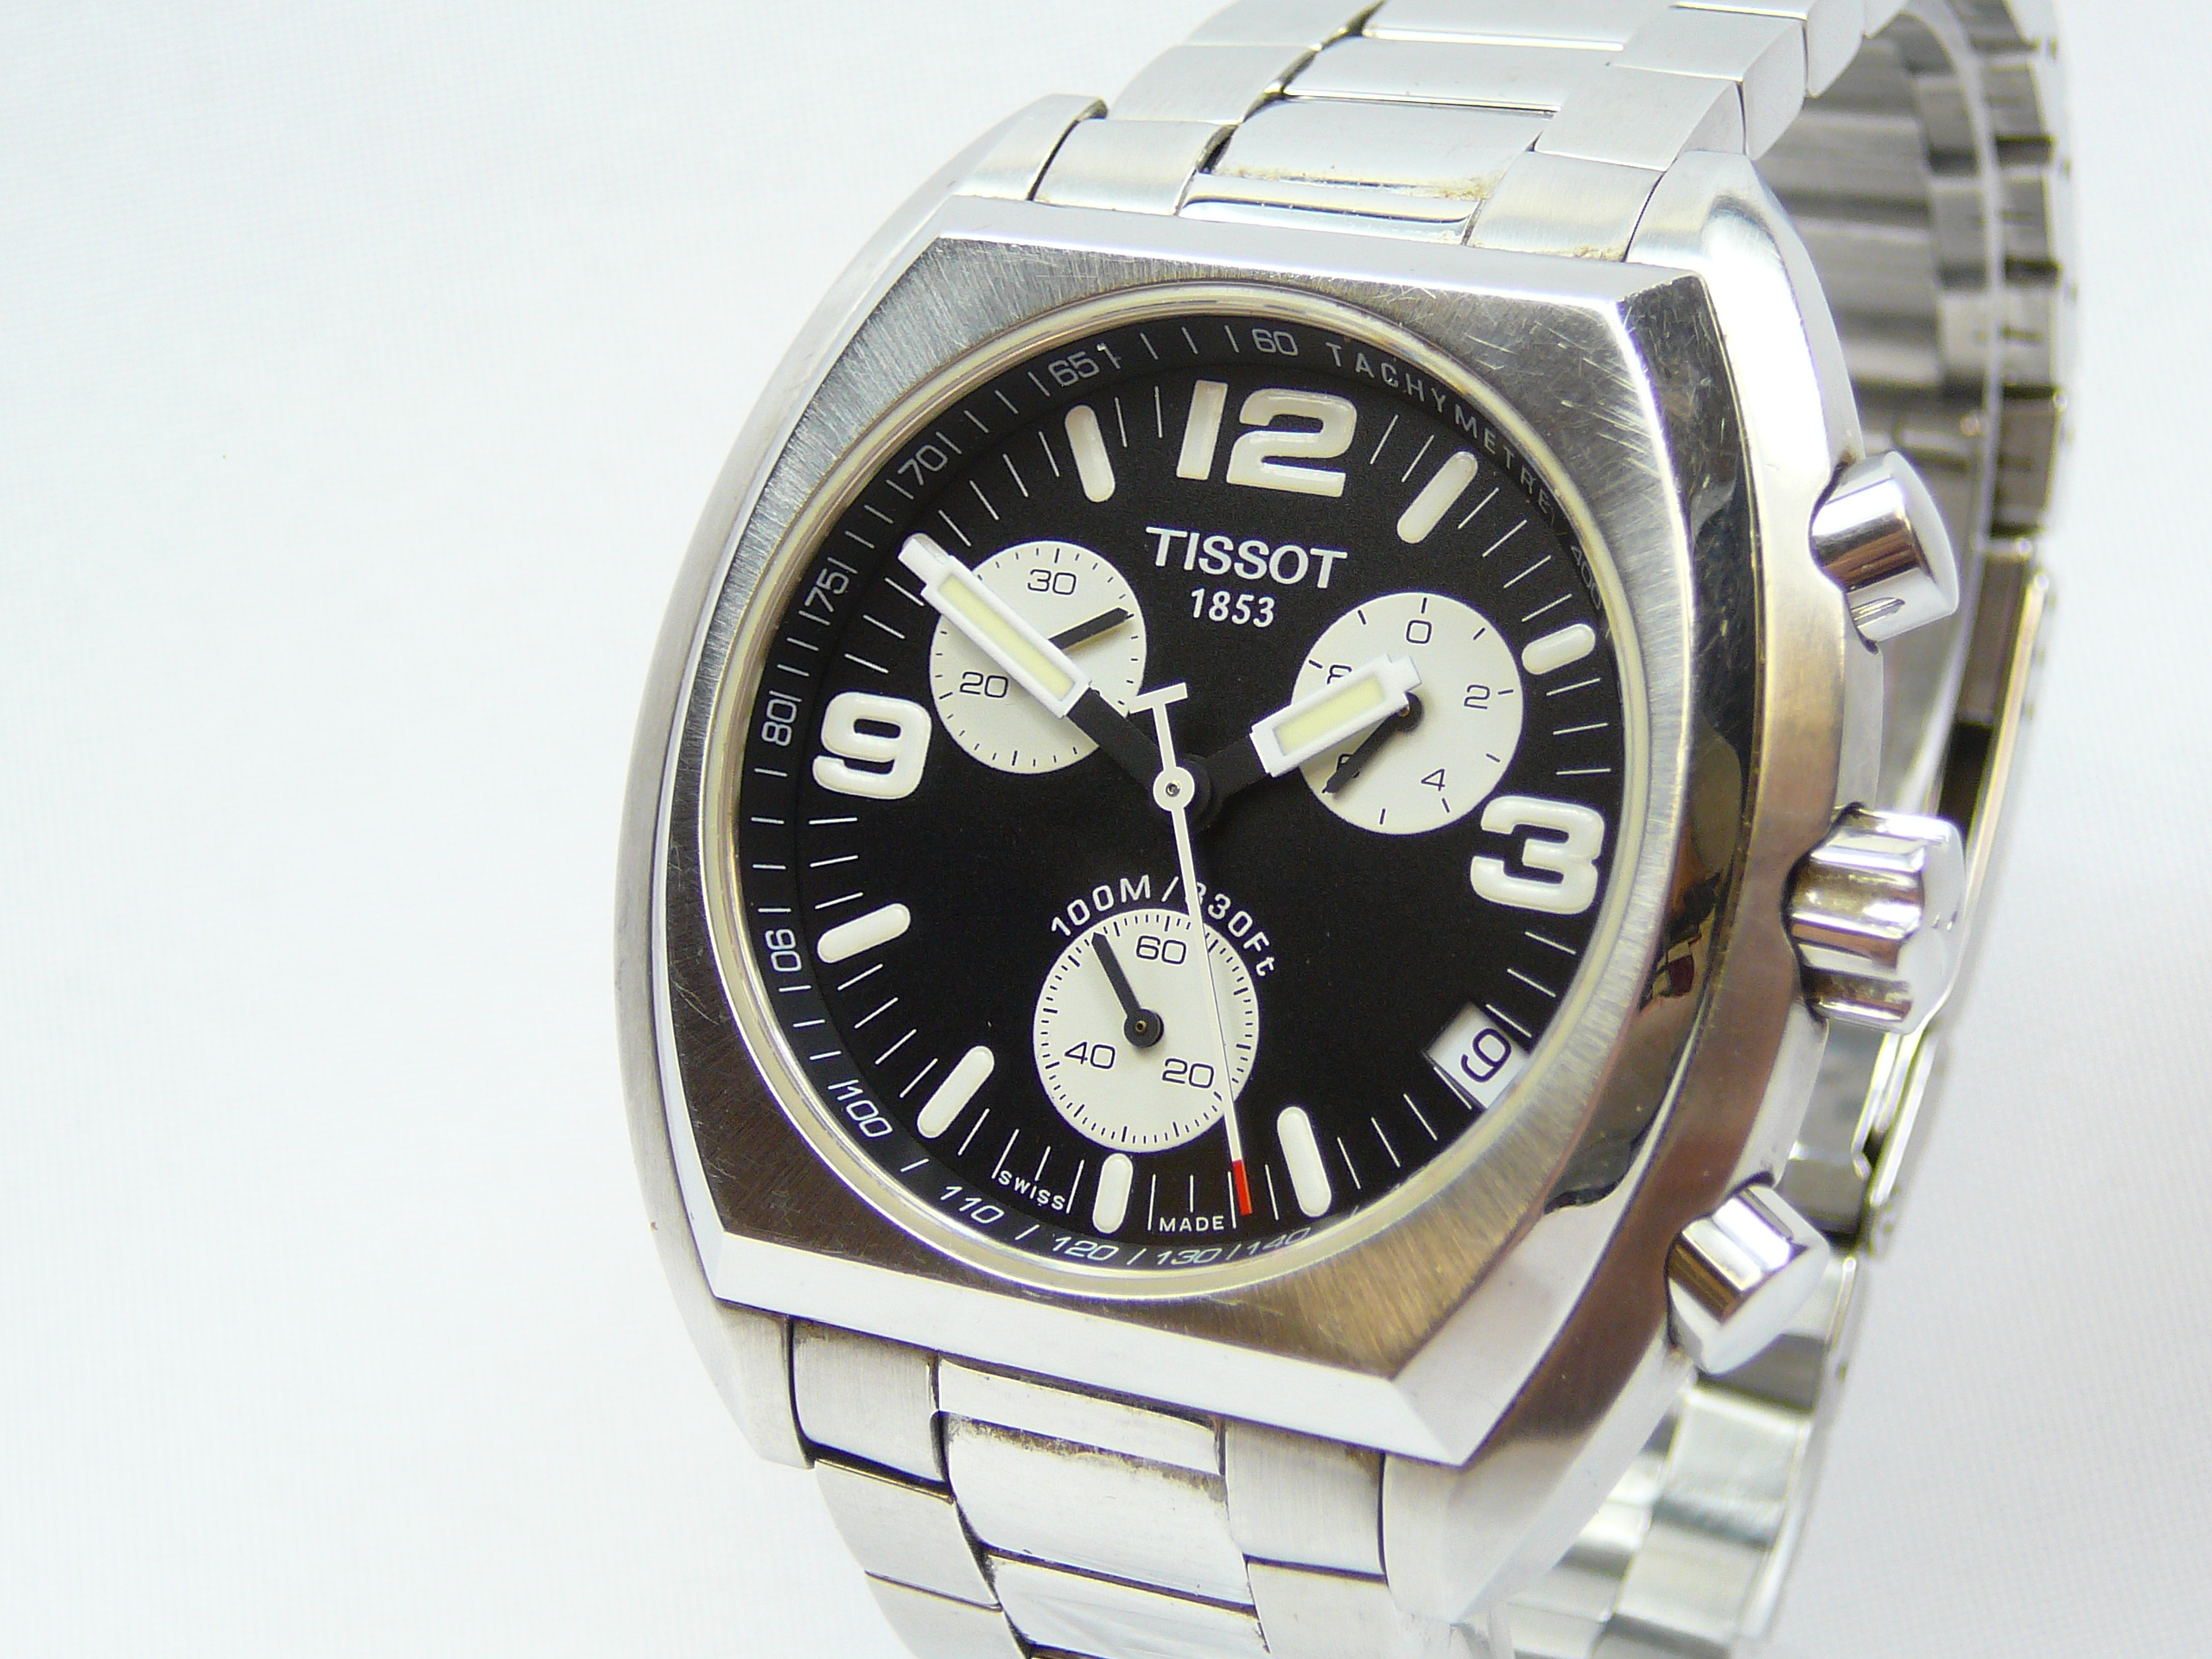 Gents Tissot Wrist Watch - Image 2 of 3